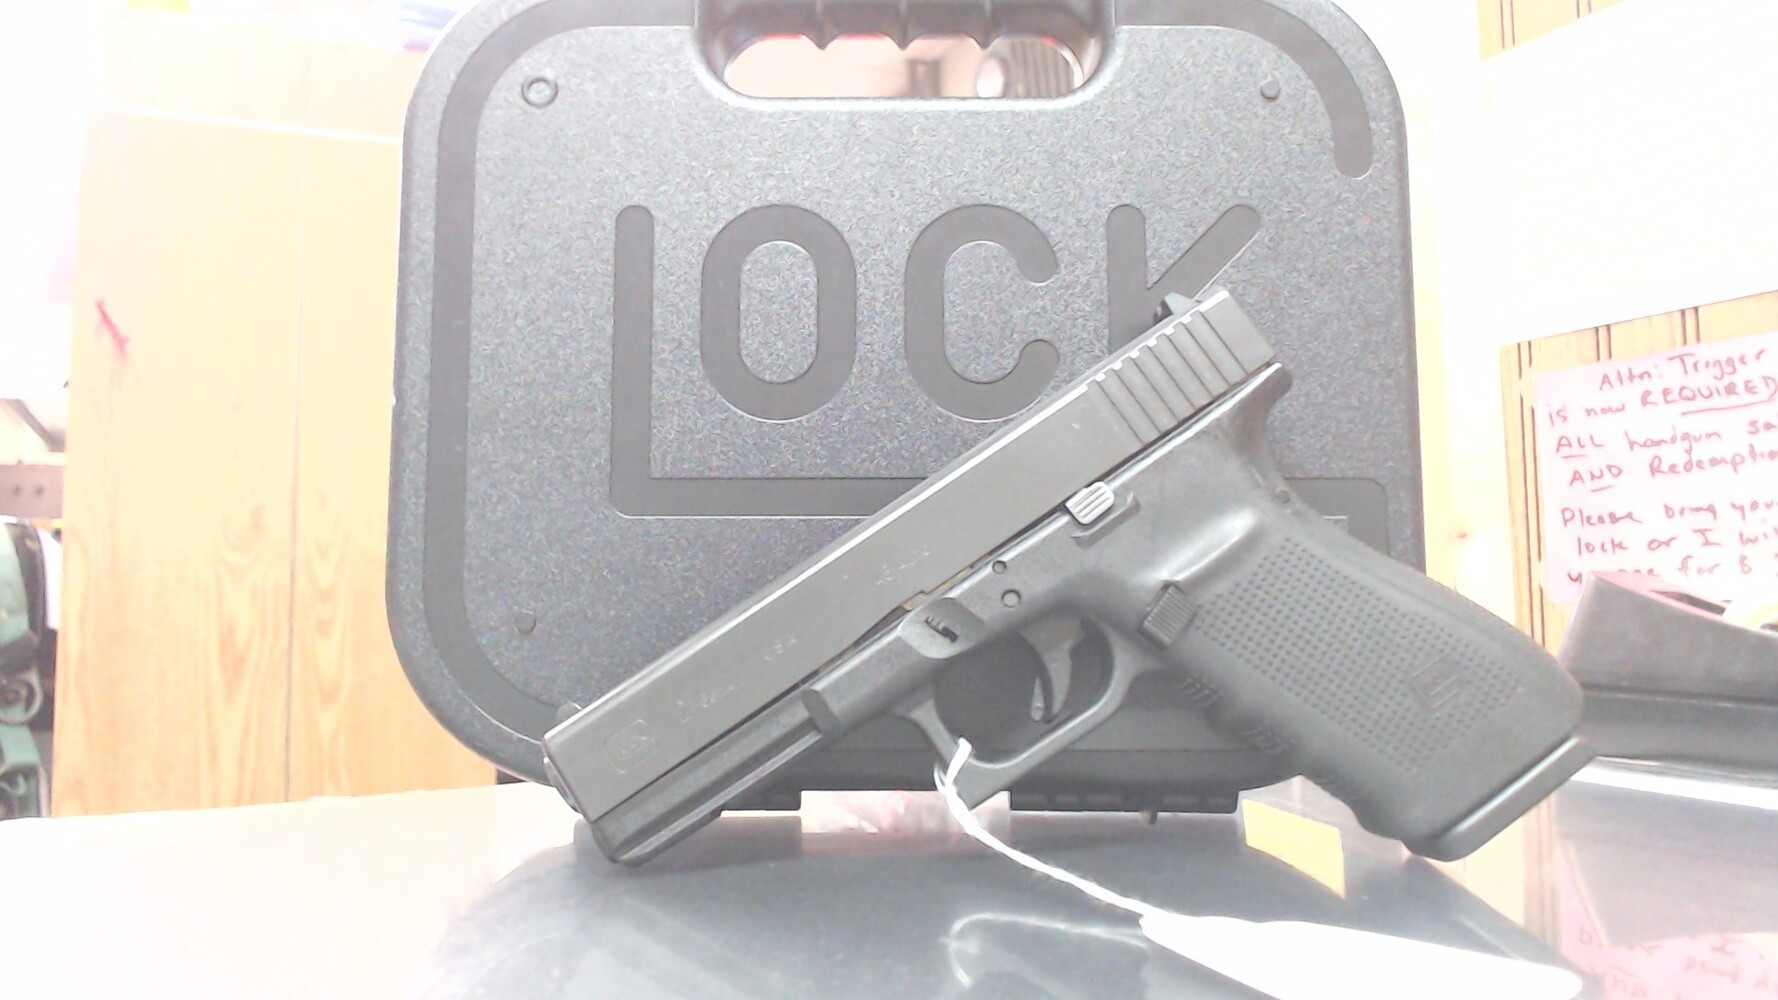 Glock Model: 21Gen4 Semi-Auto 45 w/ 3 mags and hard case